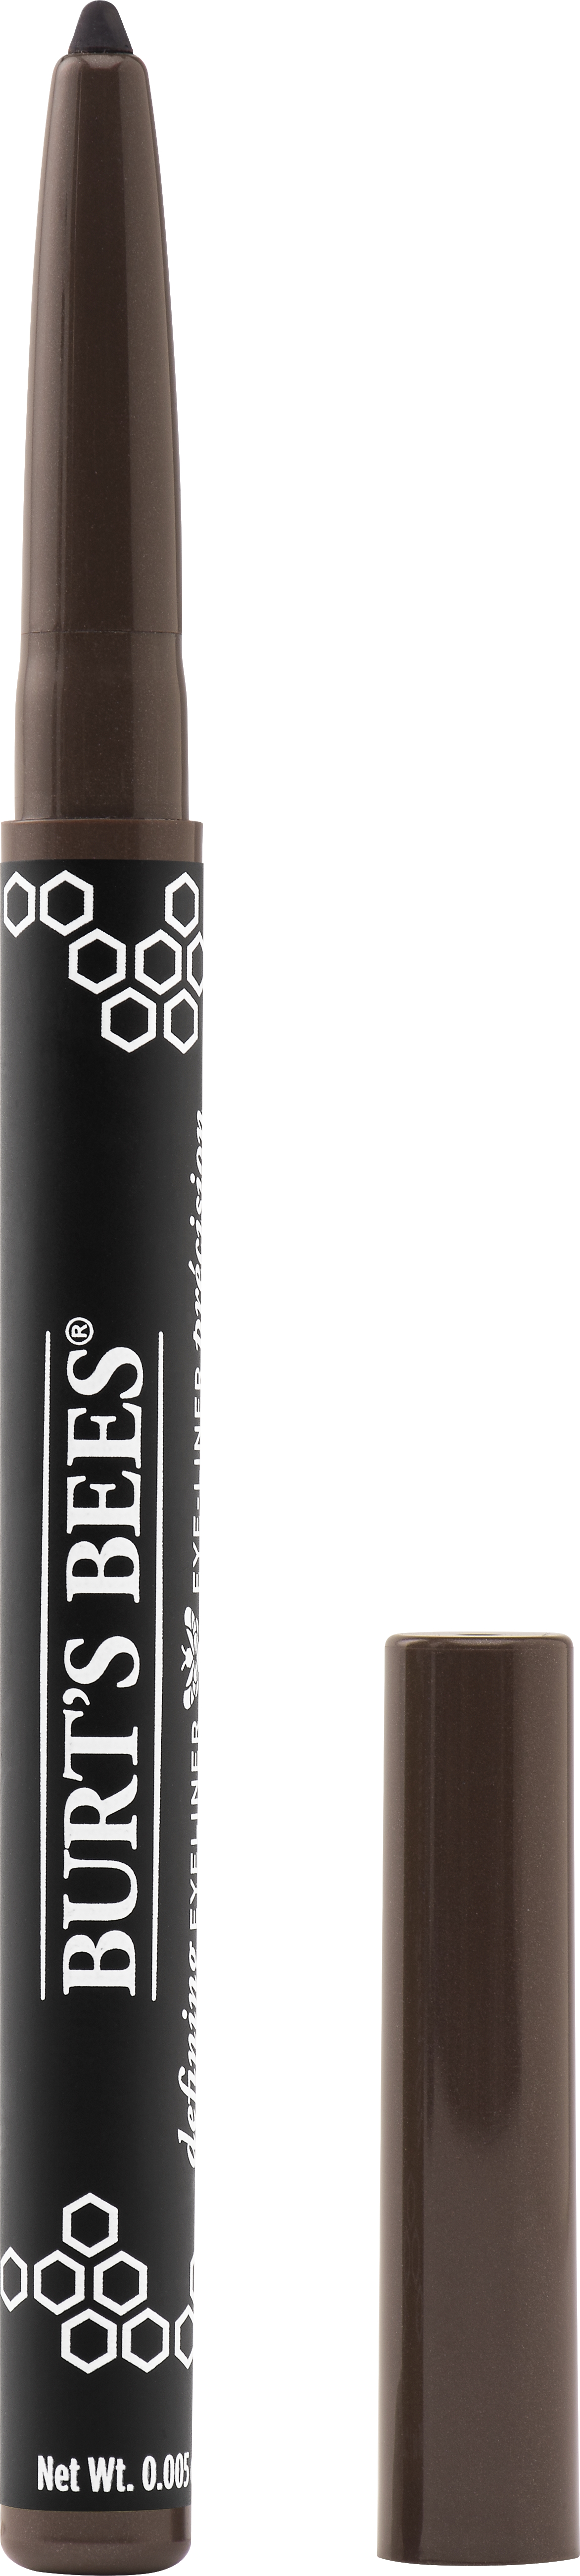 Burts Bees 100% Natural Origin Defining Eyeliner, Onyx, Satin Finish - 0.005 Ounce - image 1 of 7